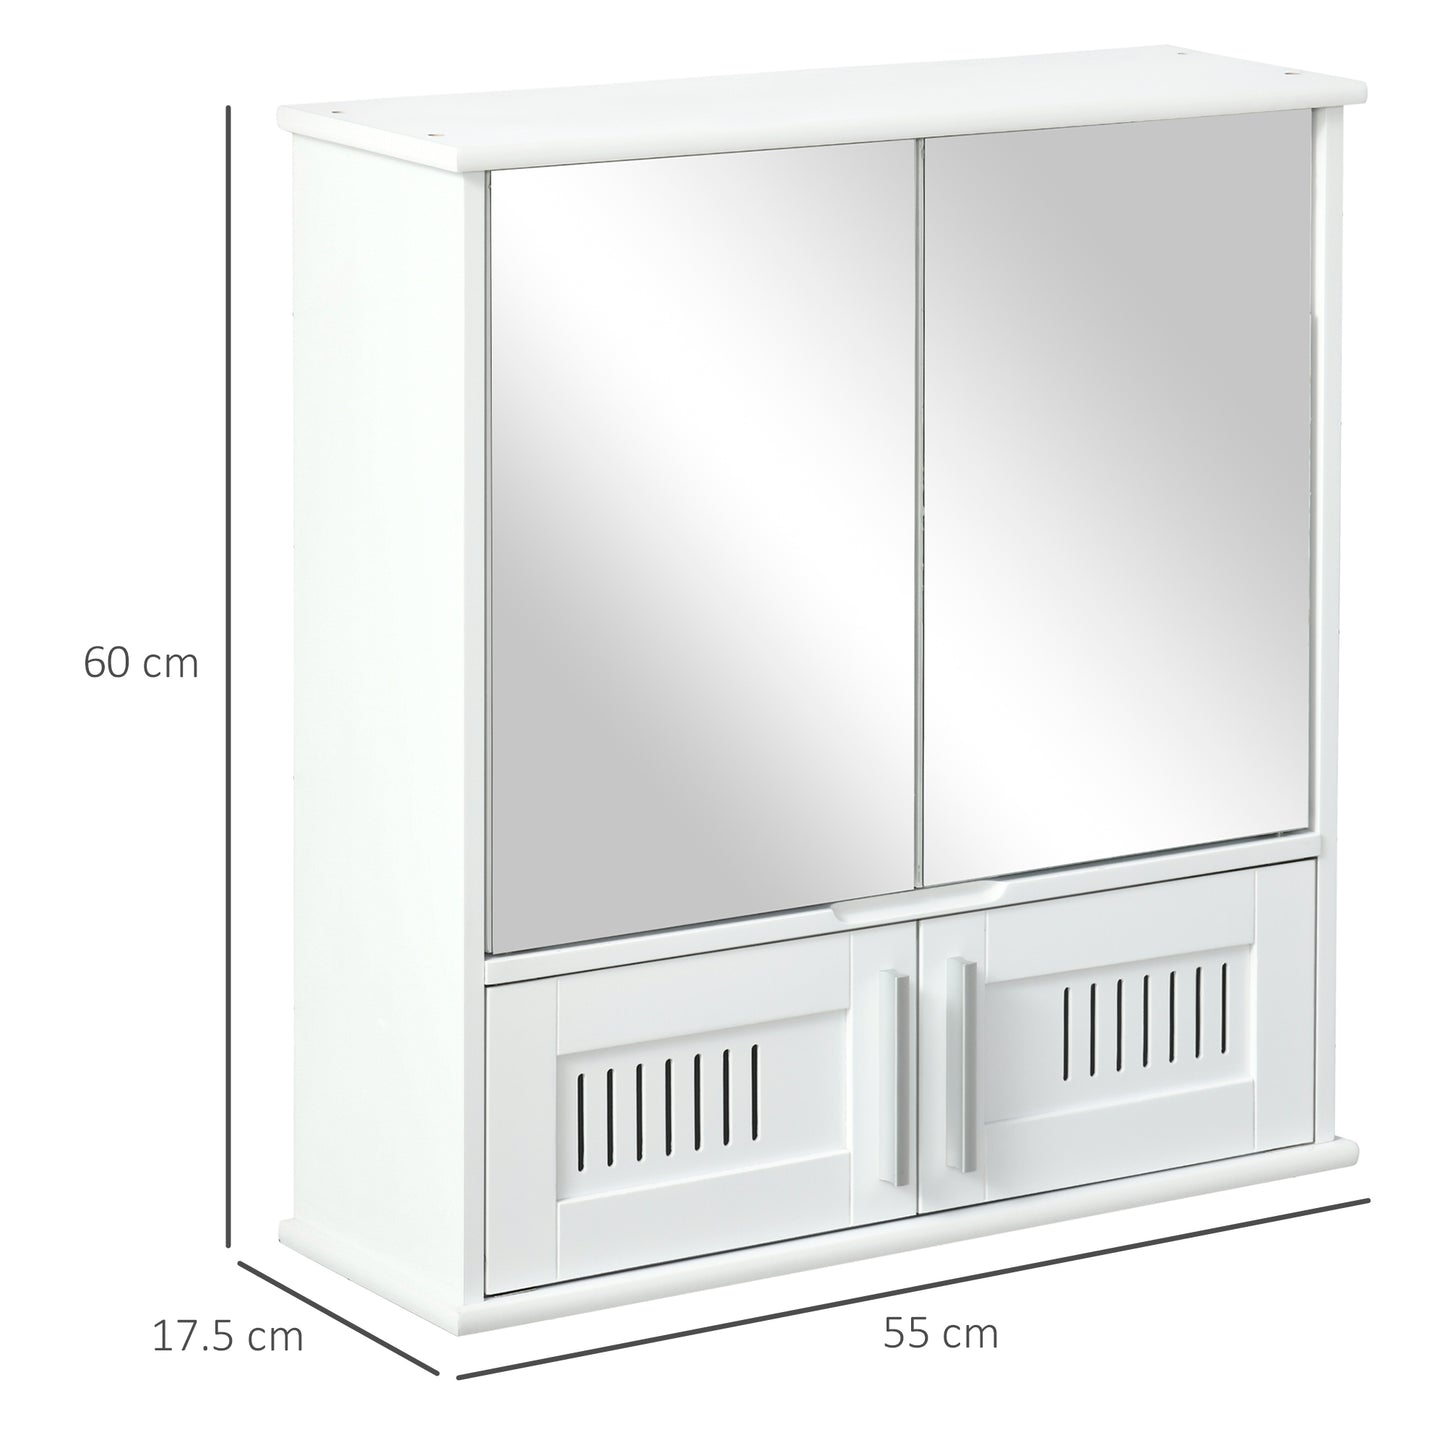 kleankin Bathroom Mirror Cabinet, Wall Mounted Storage Cupboard with Double Doors and Adjustable Shelf, Bathroom Organizer, White Unit Doors,